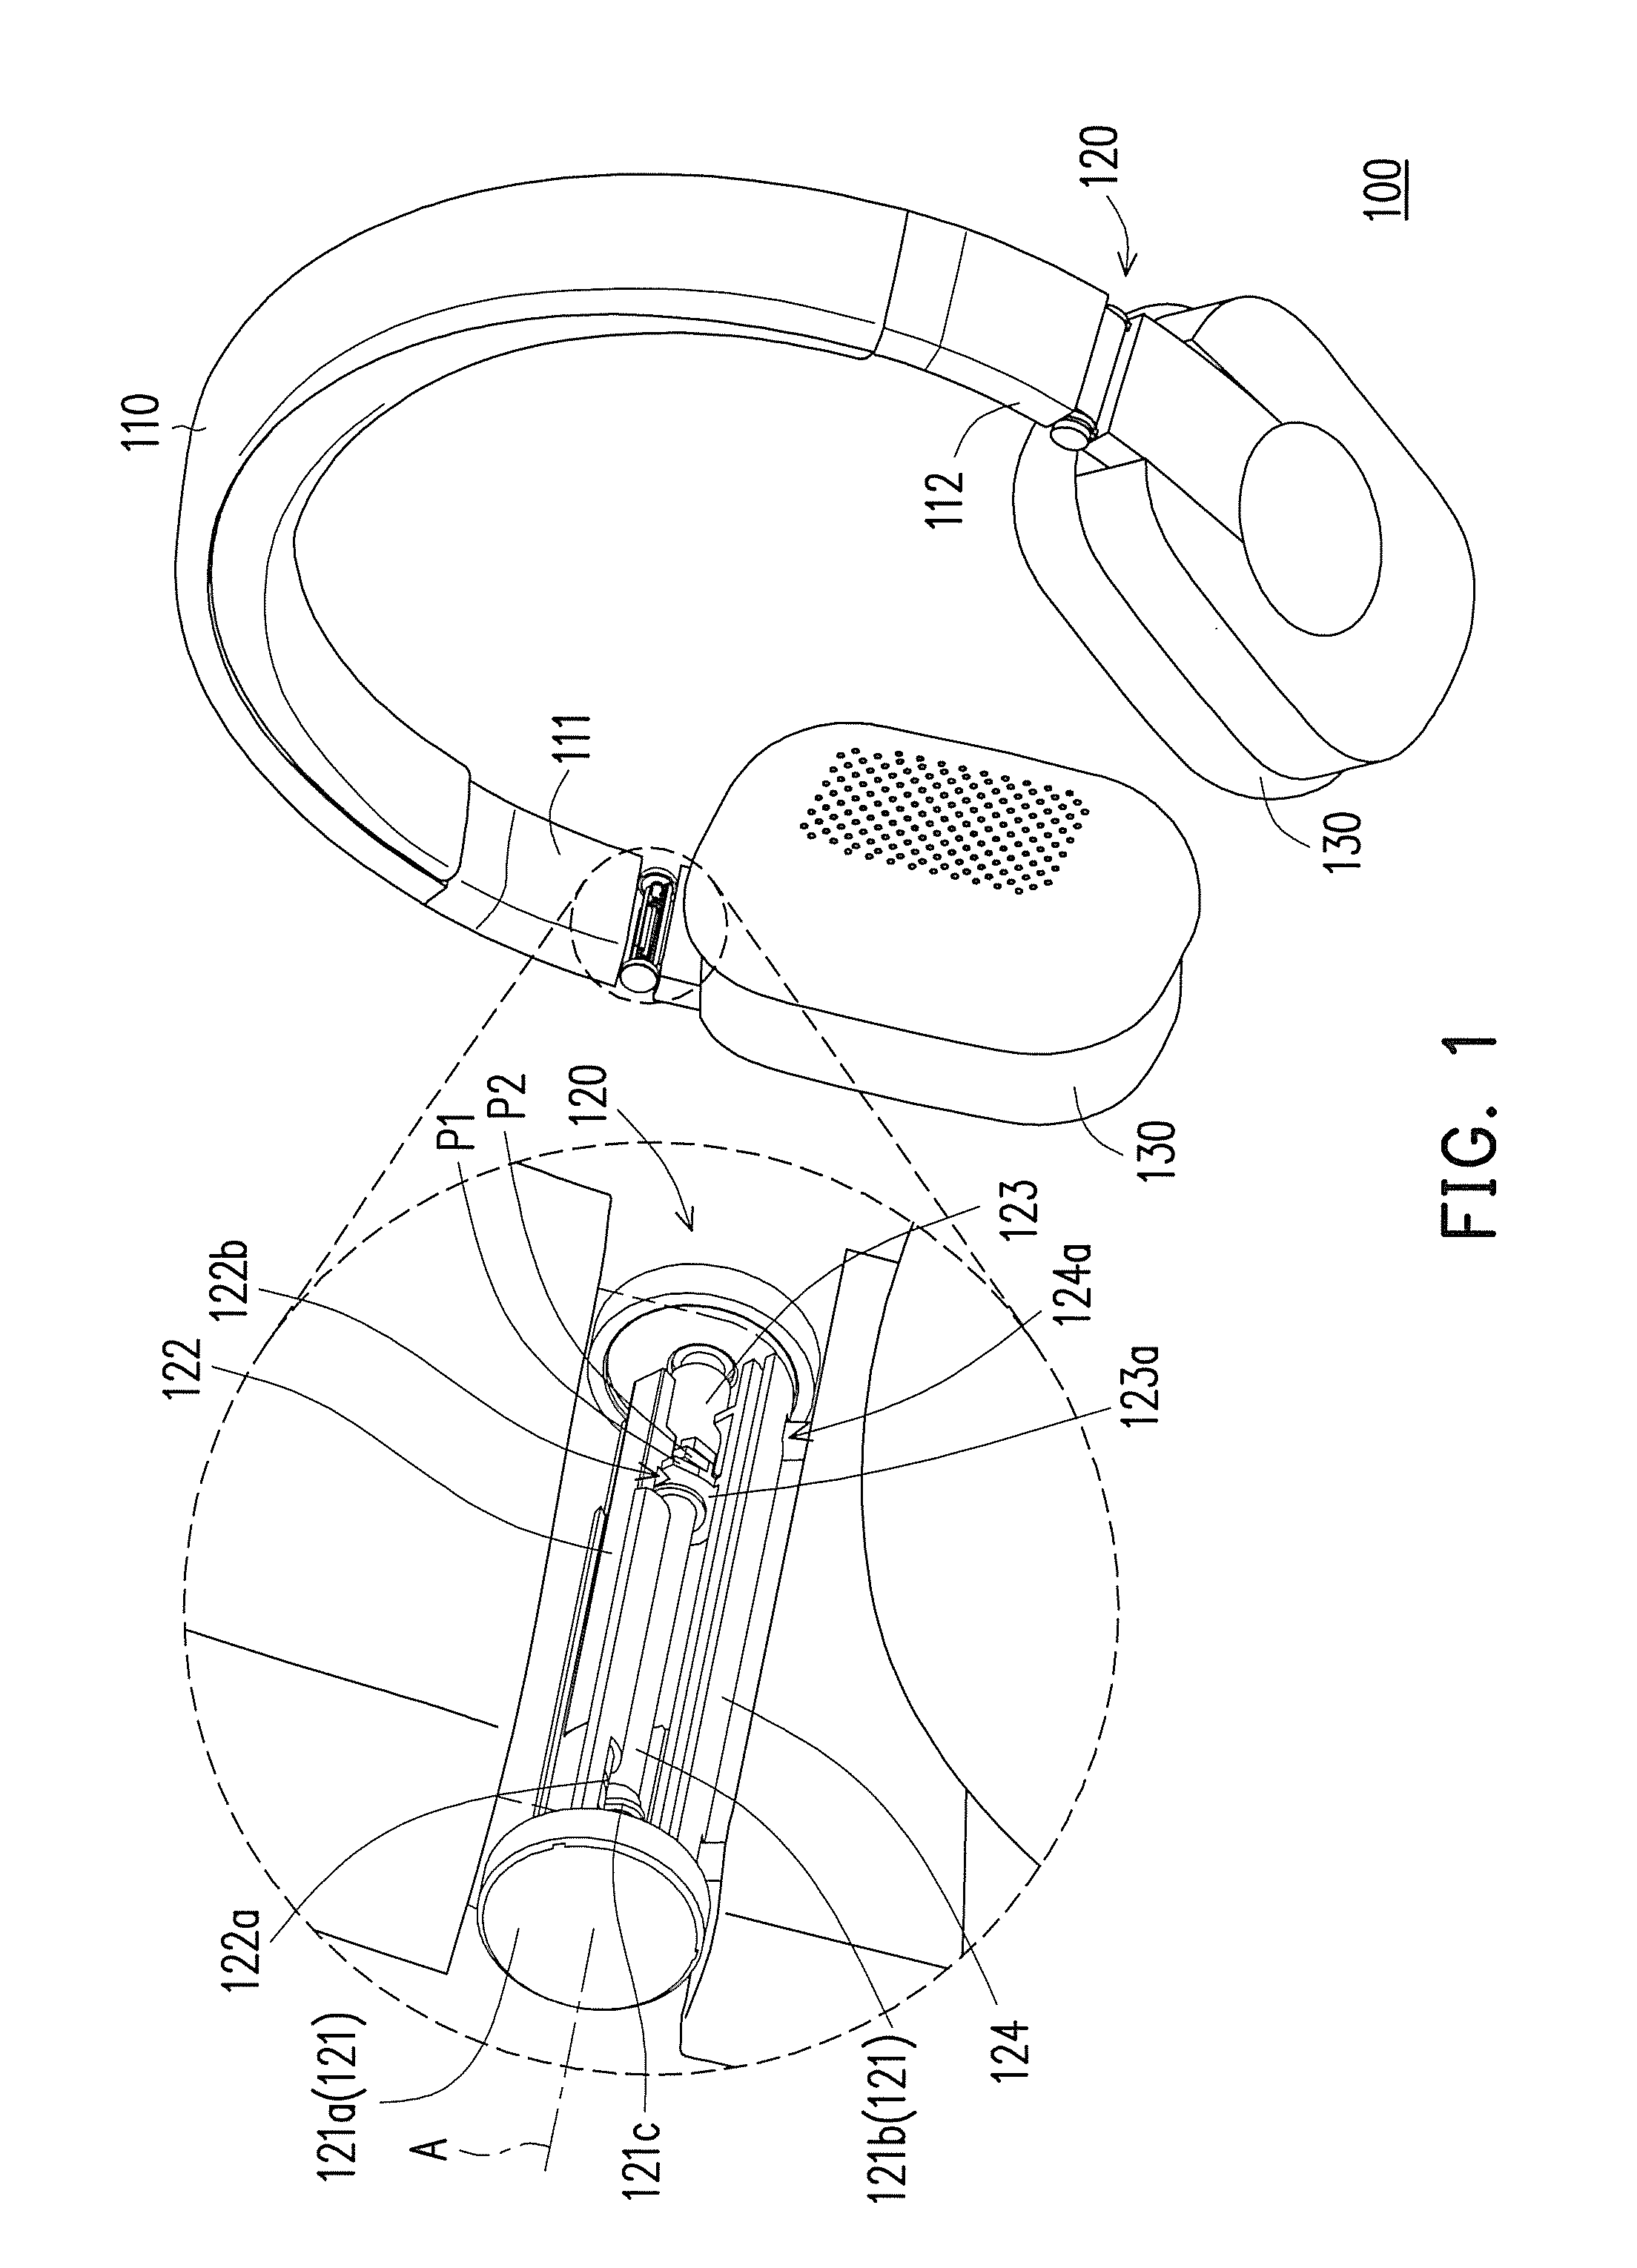 Circumaural earphone